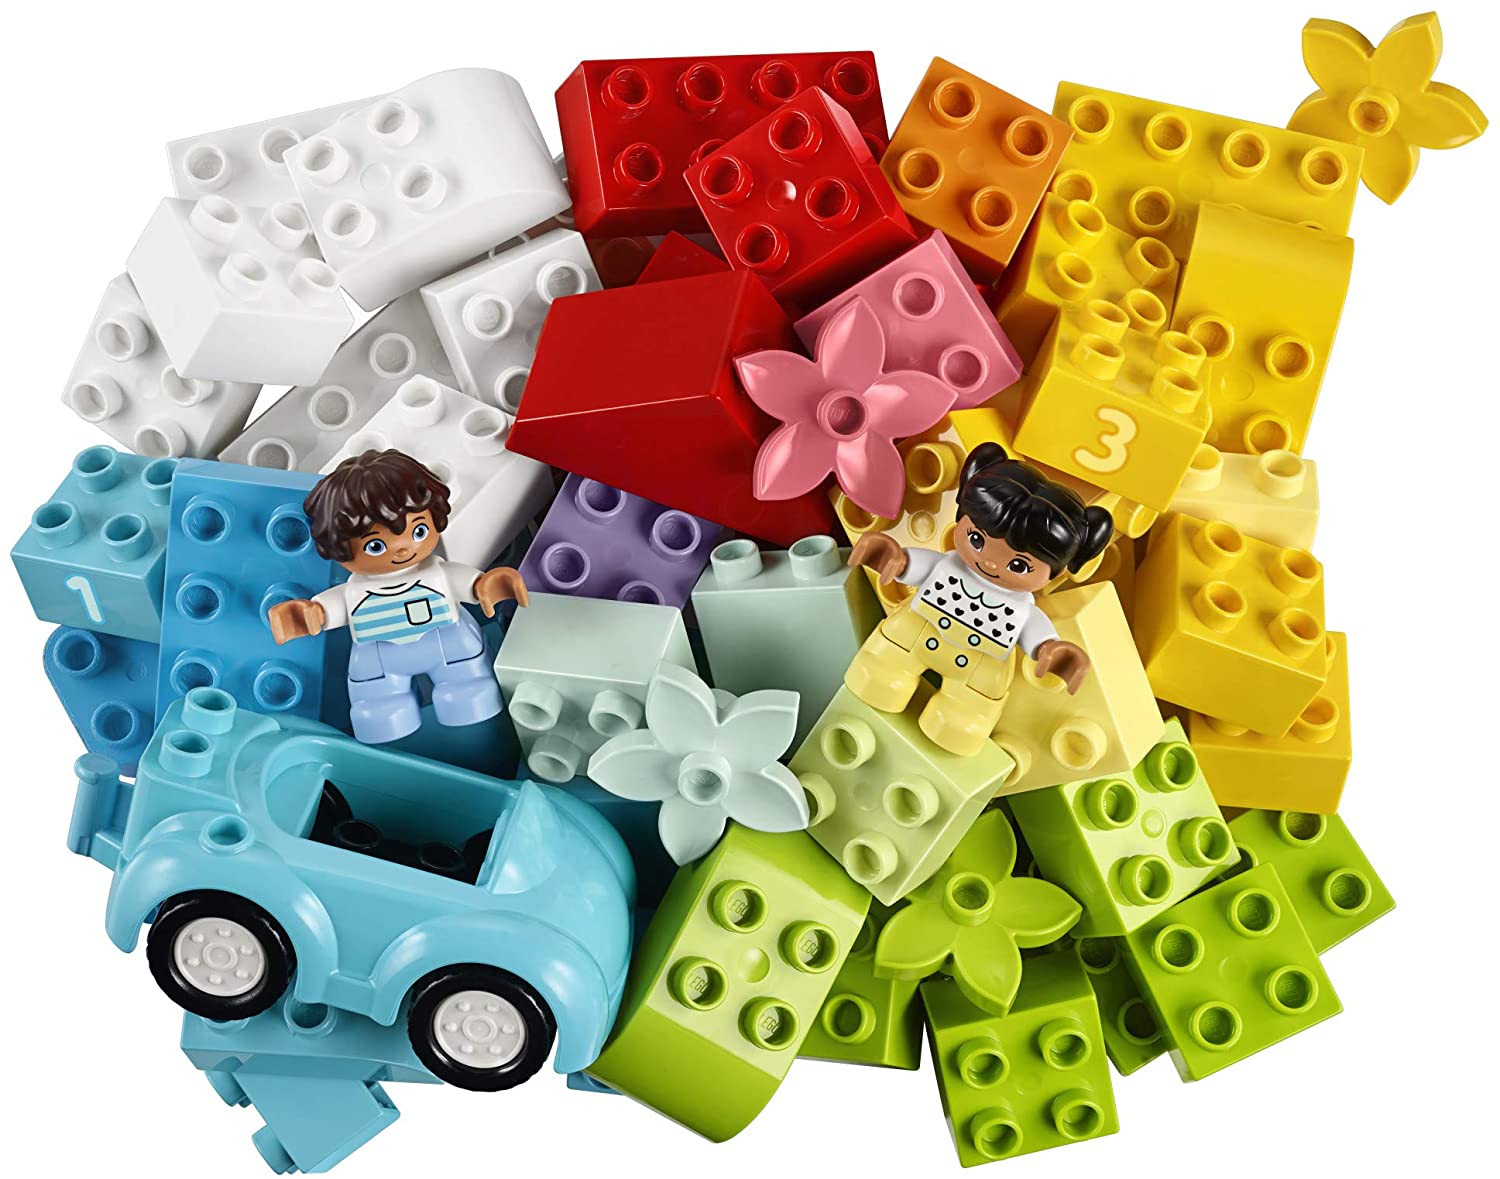 LEGO DUPLO Classic Brick Box First Set with Storage Box — 10913